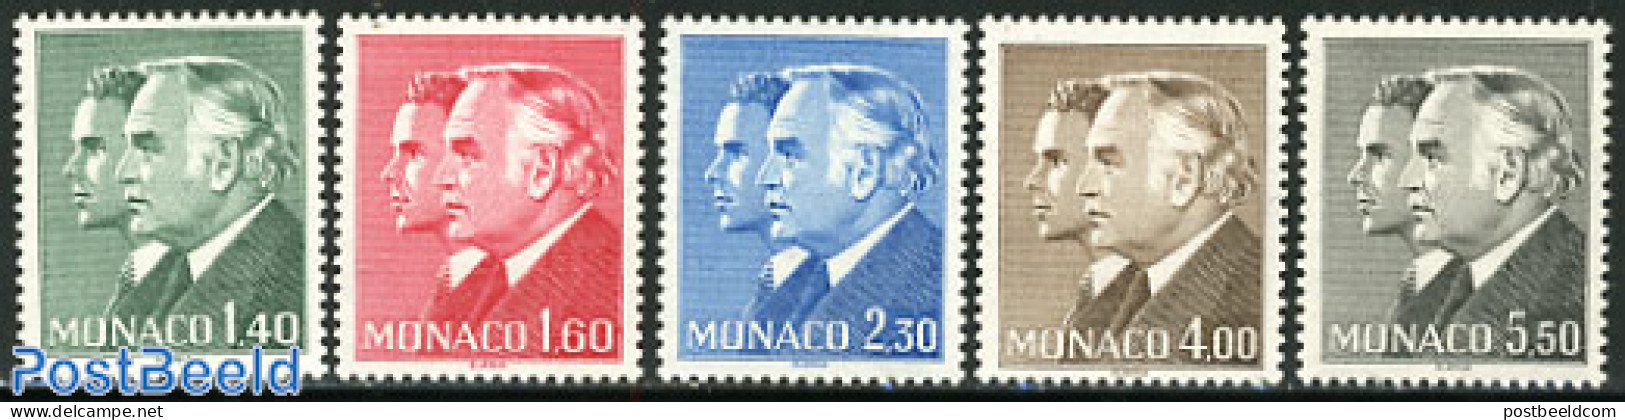 Monaco 1981 Definitives 5v, Mint NH - Unused Stamps